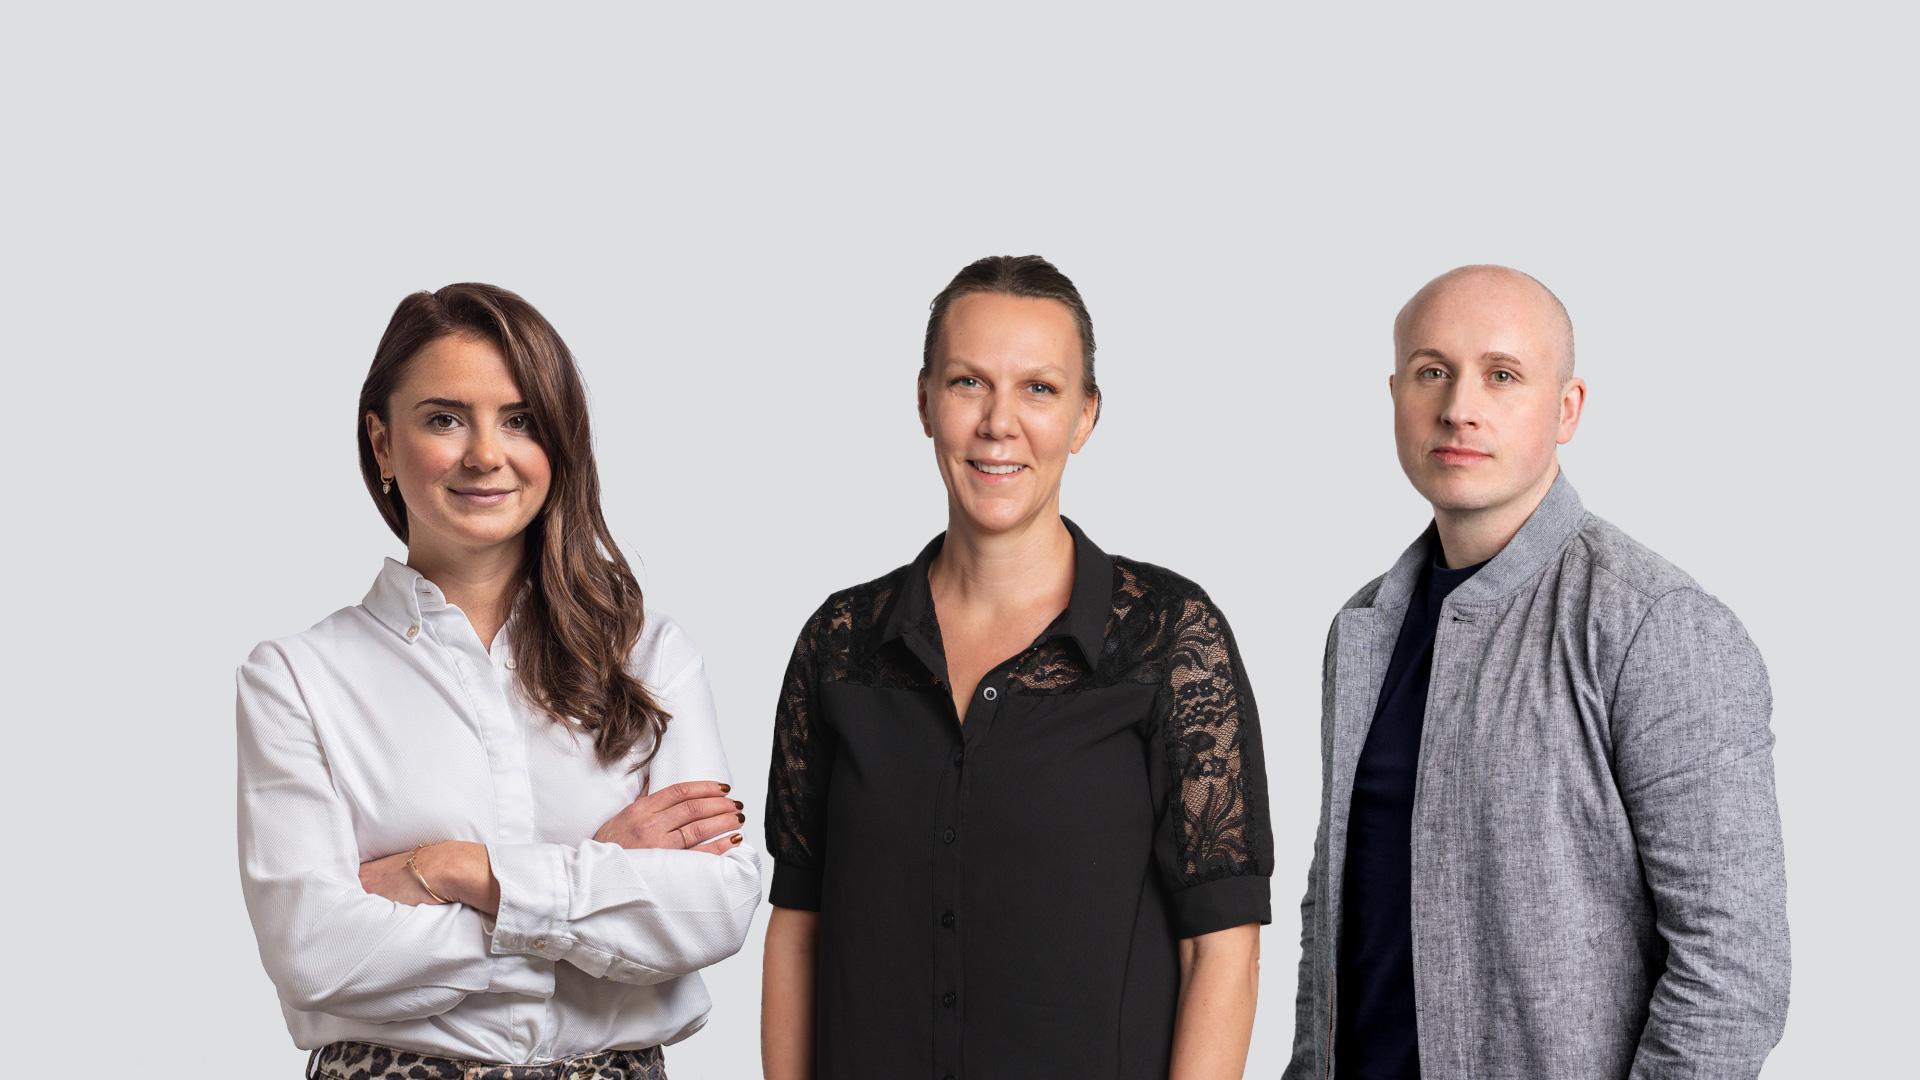 UK Management team - Joanna Trippett, Alicja Lloyd and Brian Robinson